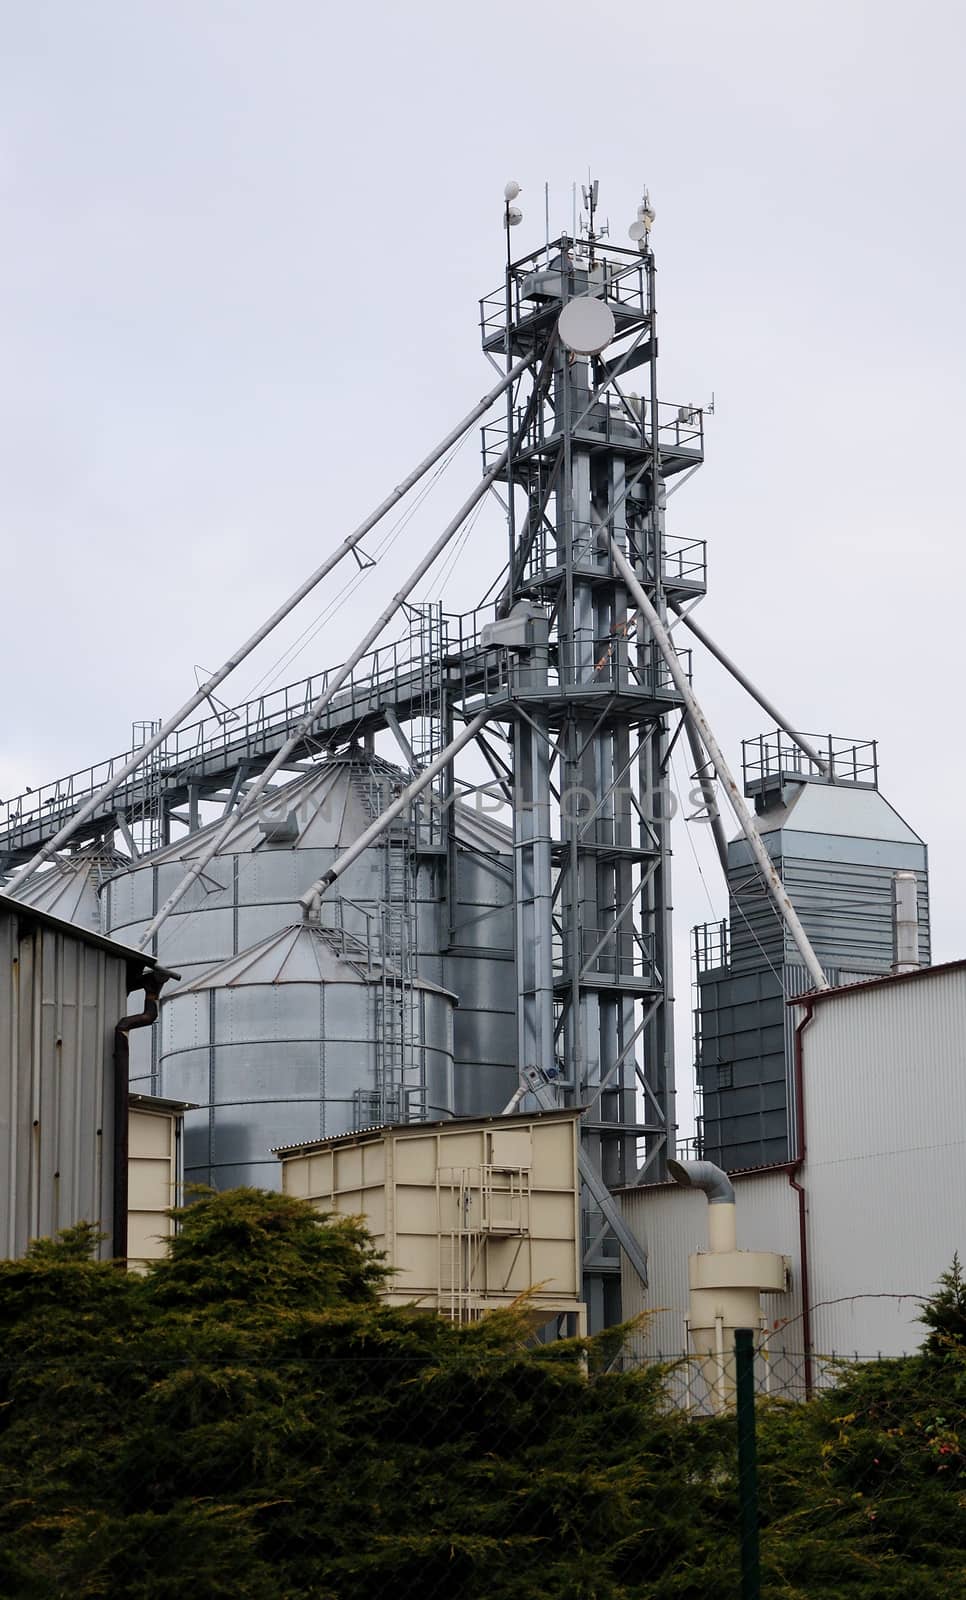 Photo of big factory and grain silos.